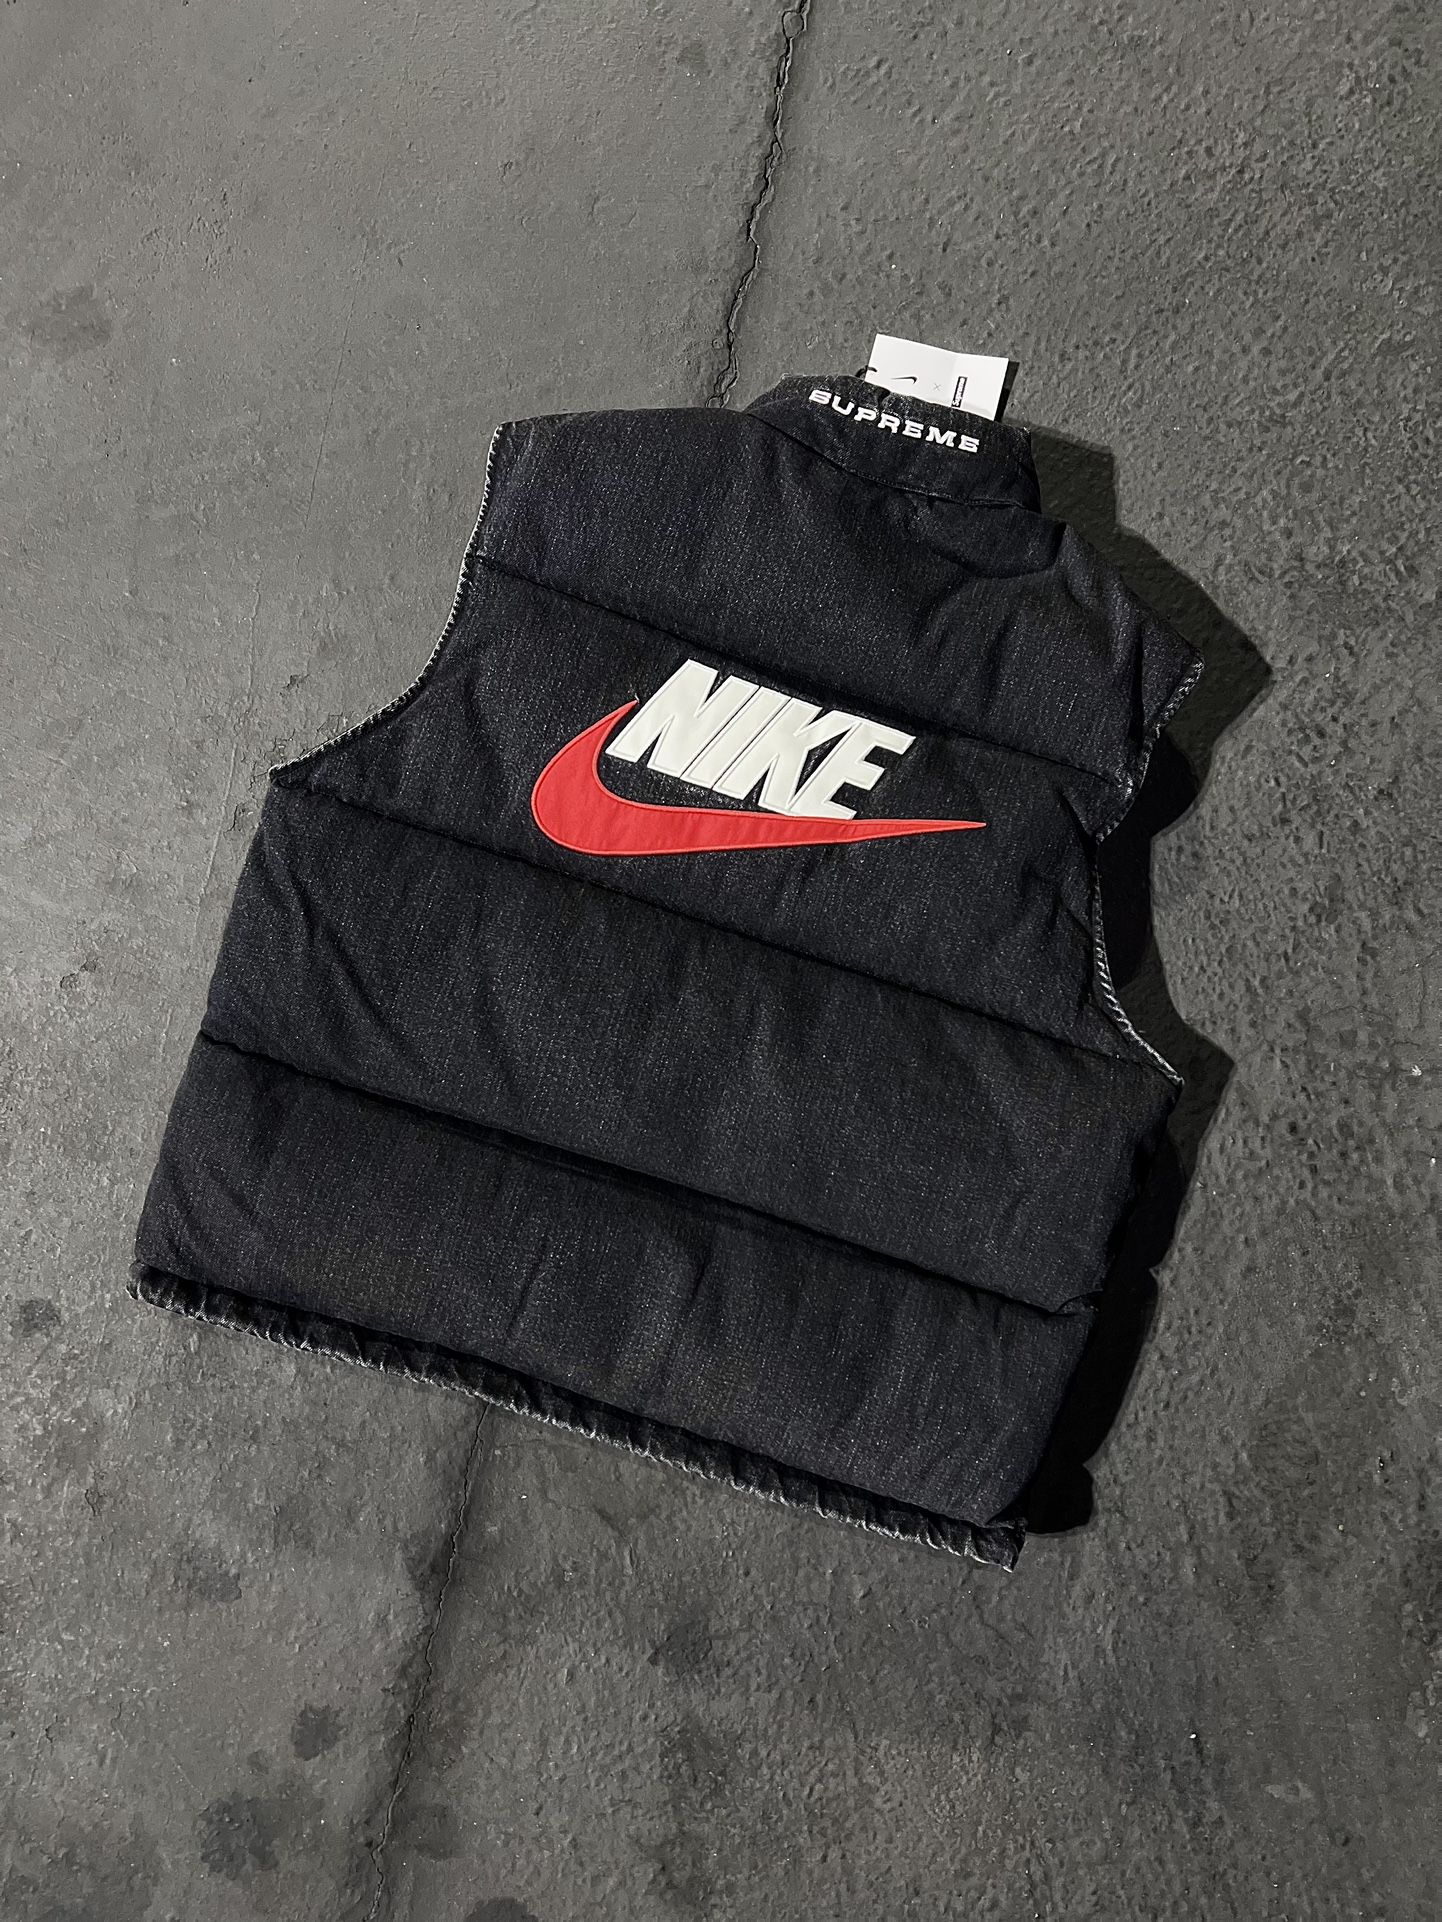 Supreme x Nike Denim Puffer Vest ‘Black’ Brand New